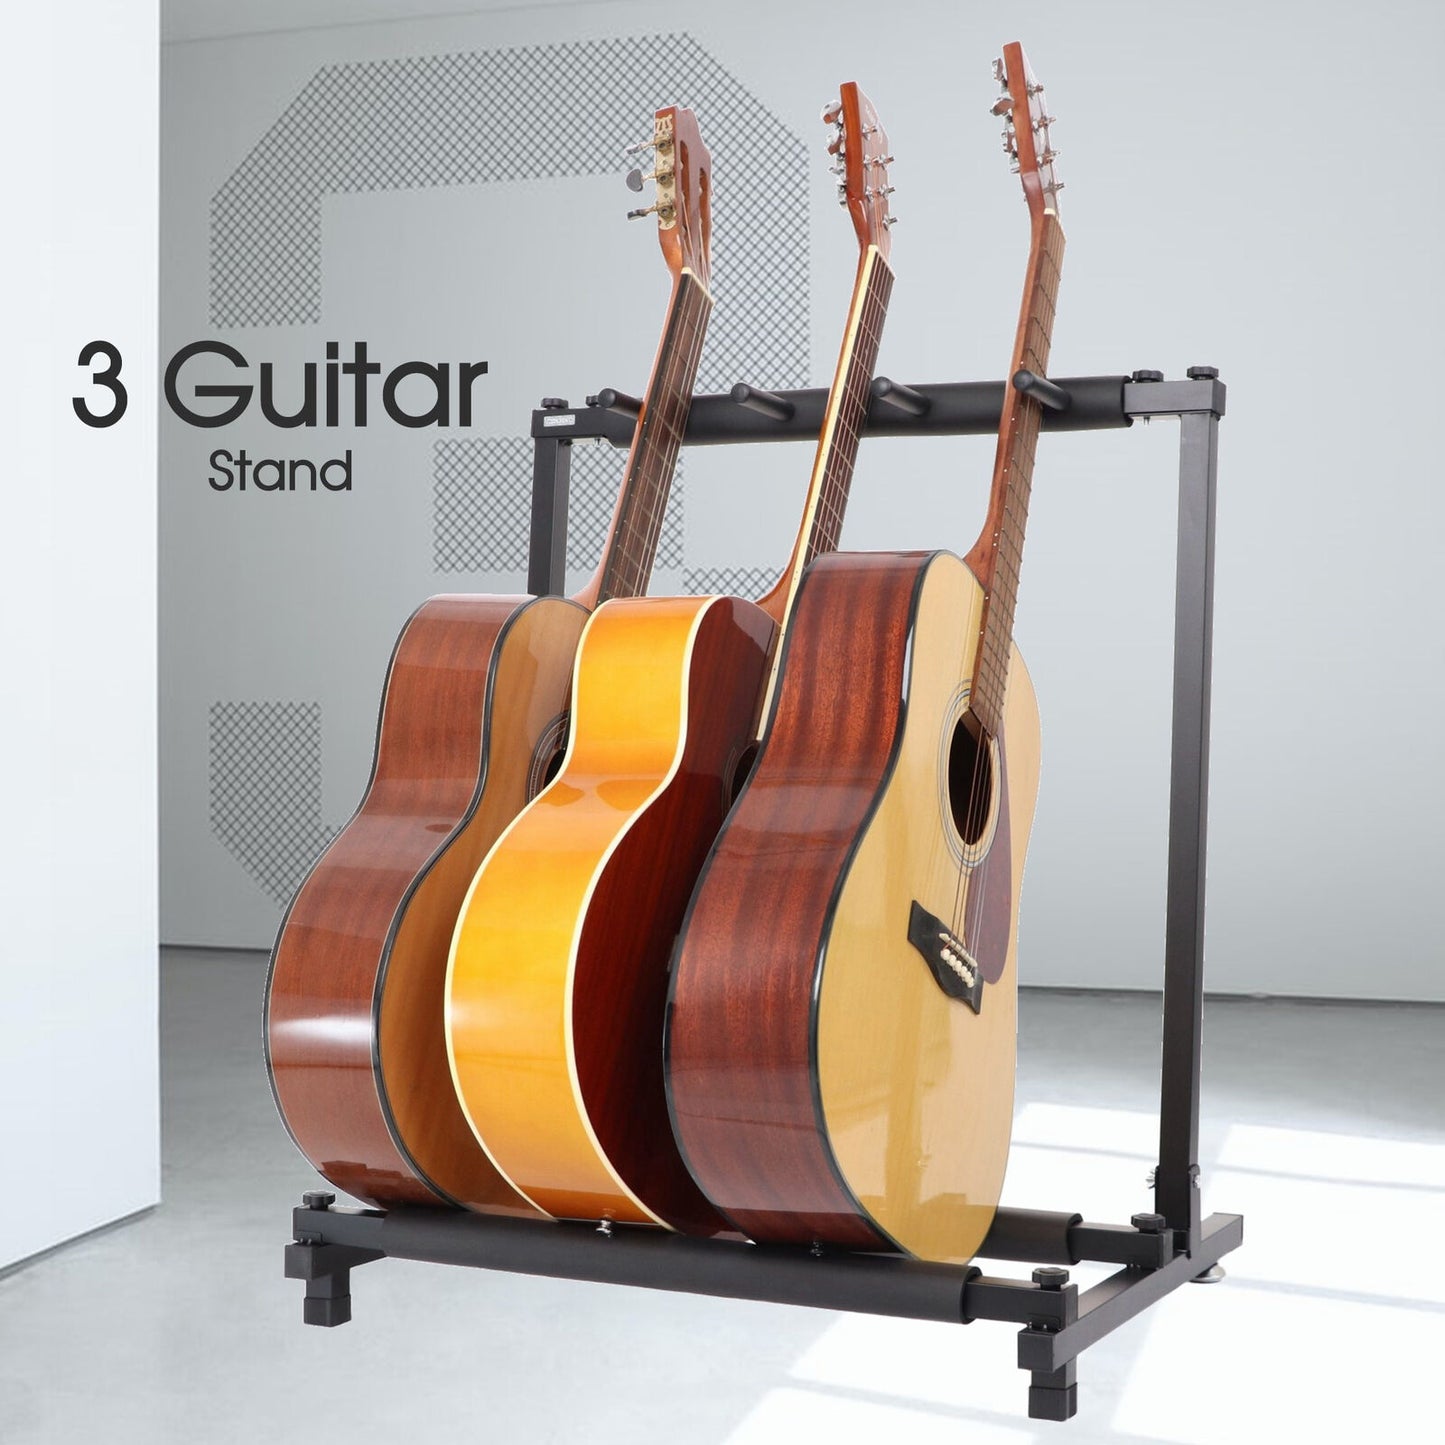 Haze GS014-3 Metal Structure 3-Guitar-Stand/Storage & Display Rack,Foldable,BK